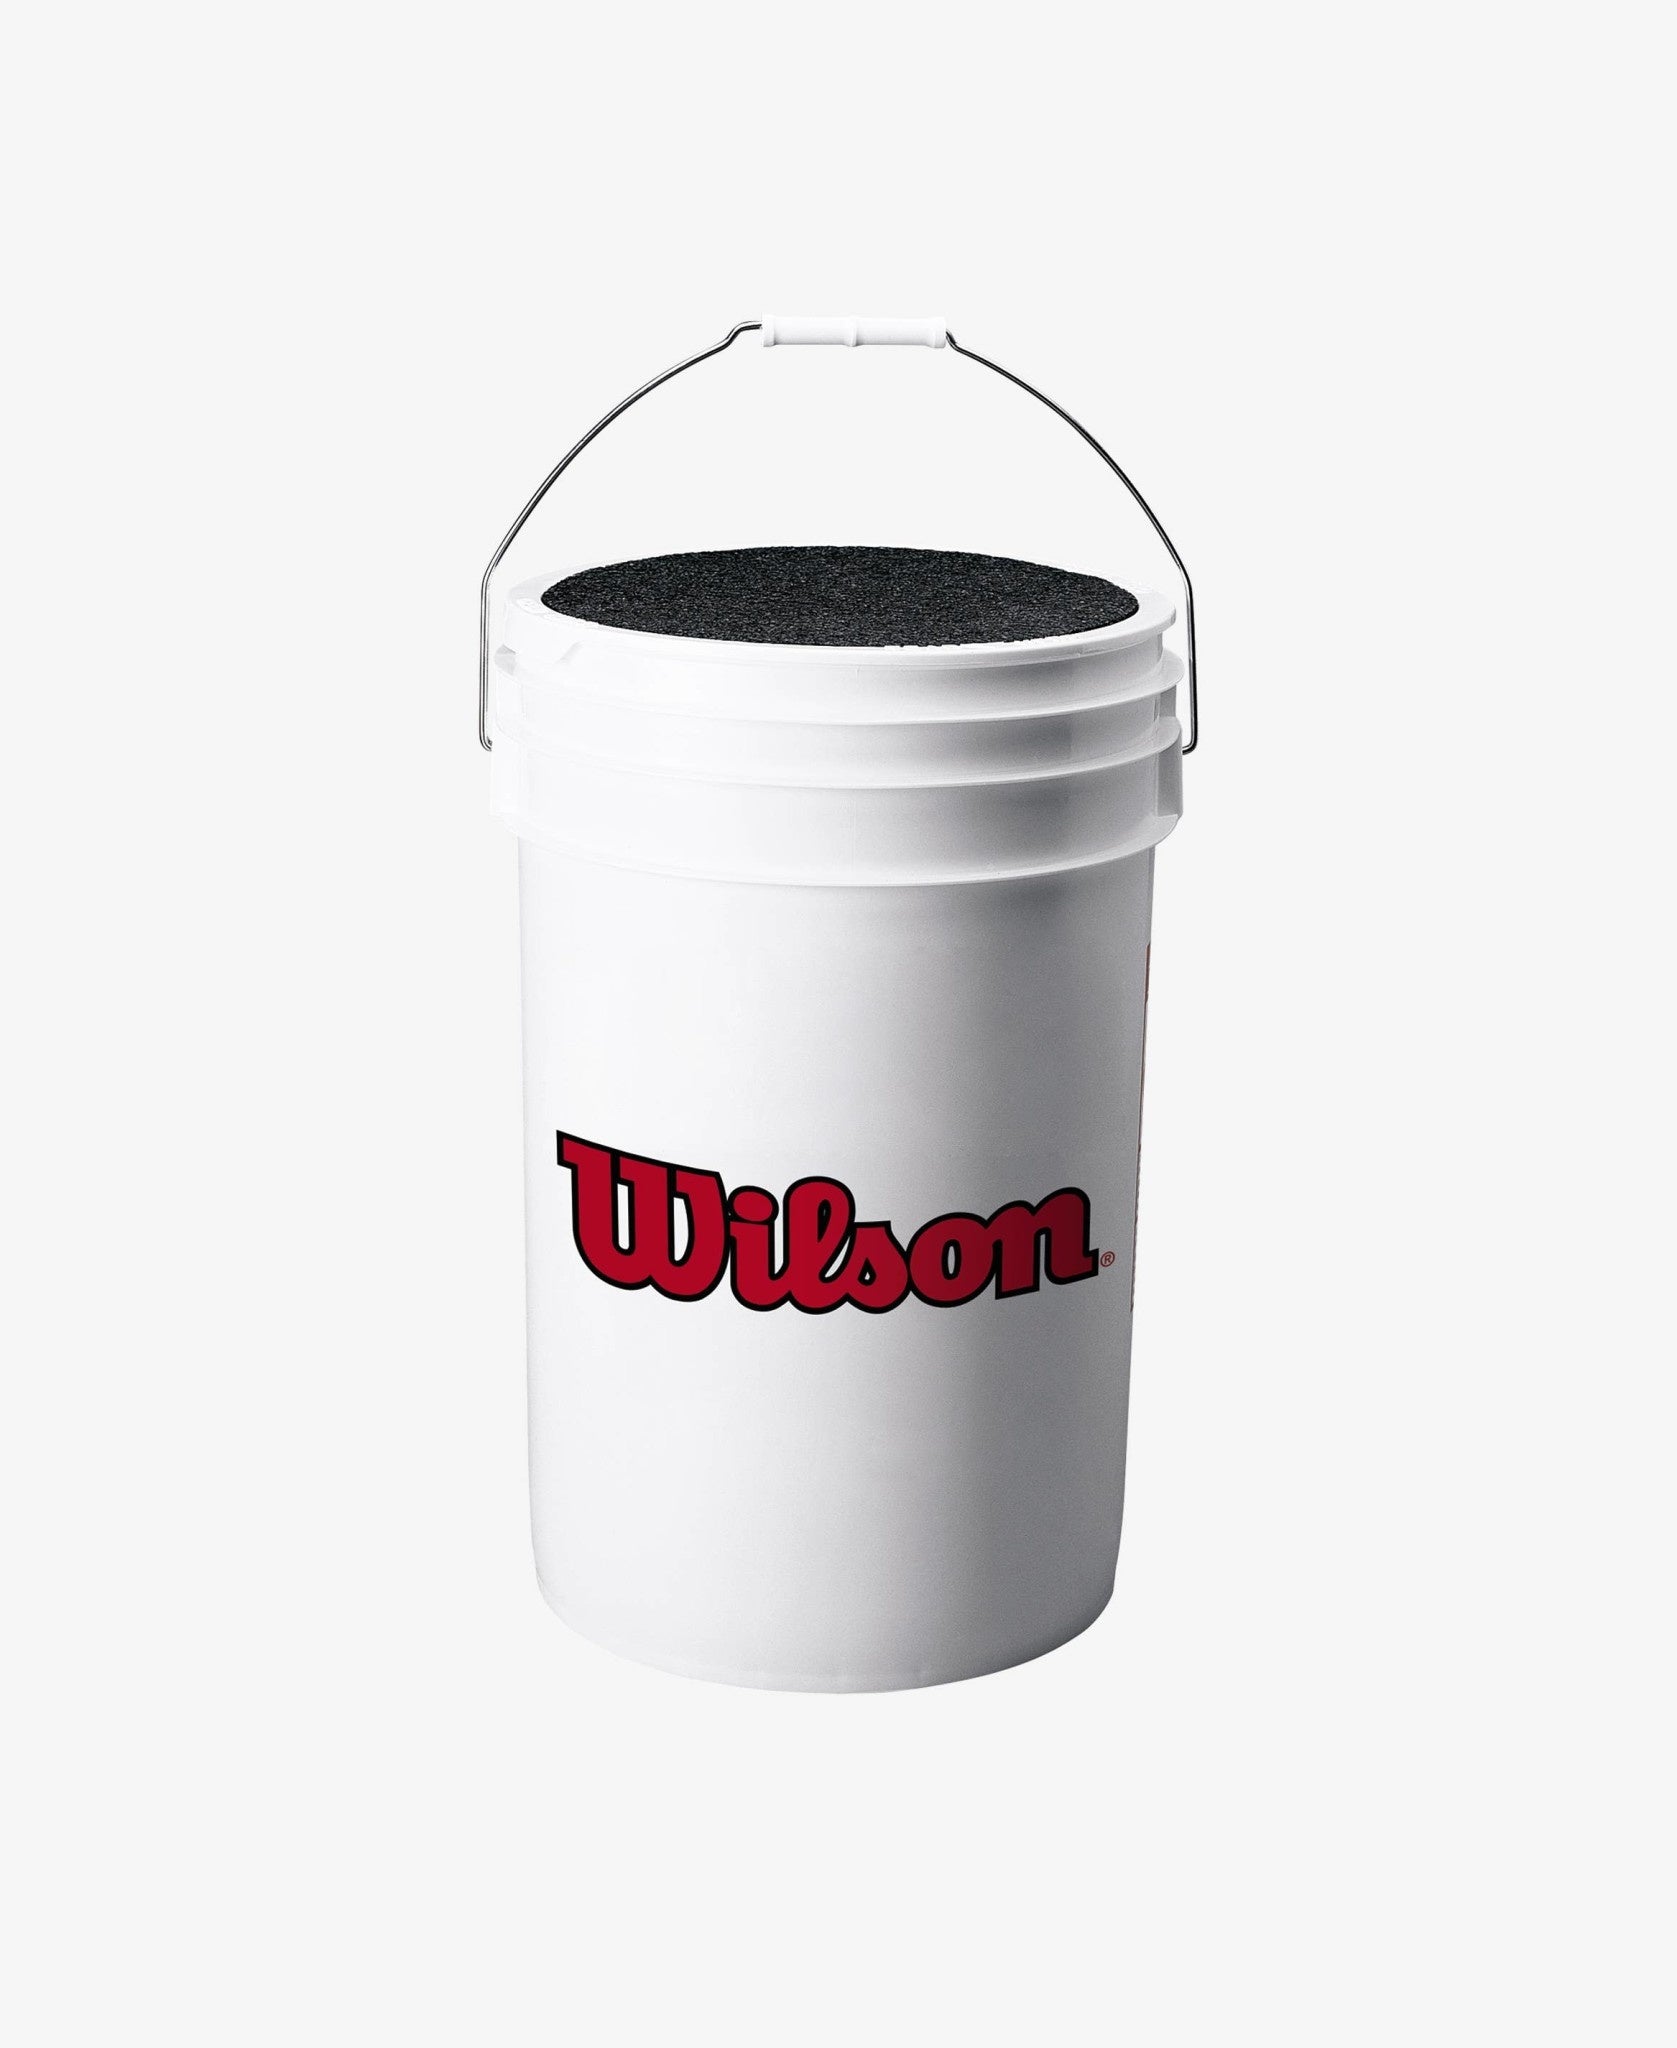 Wilson BTL ball Bucket with Lid